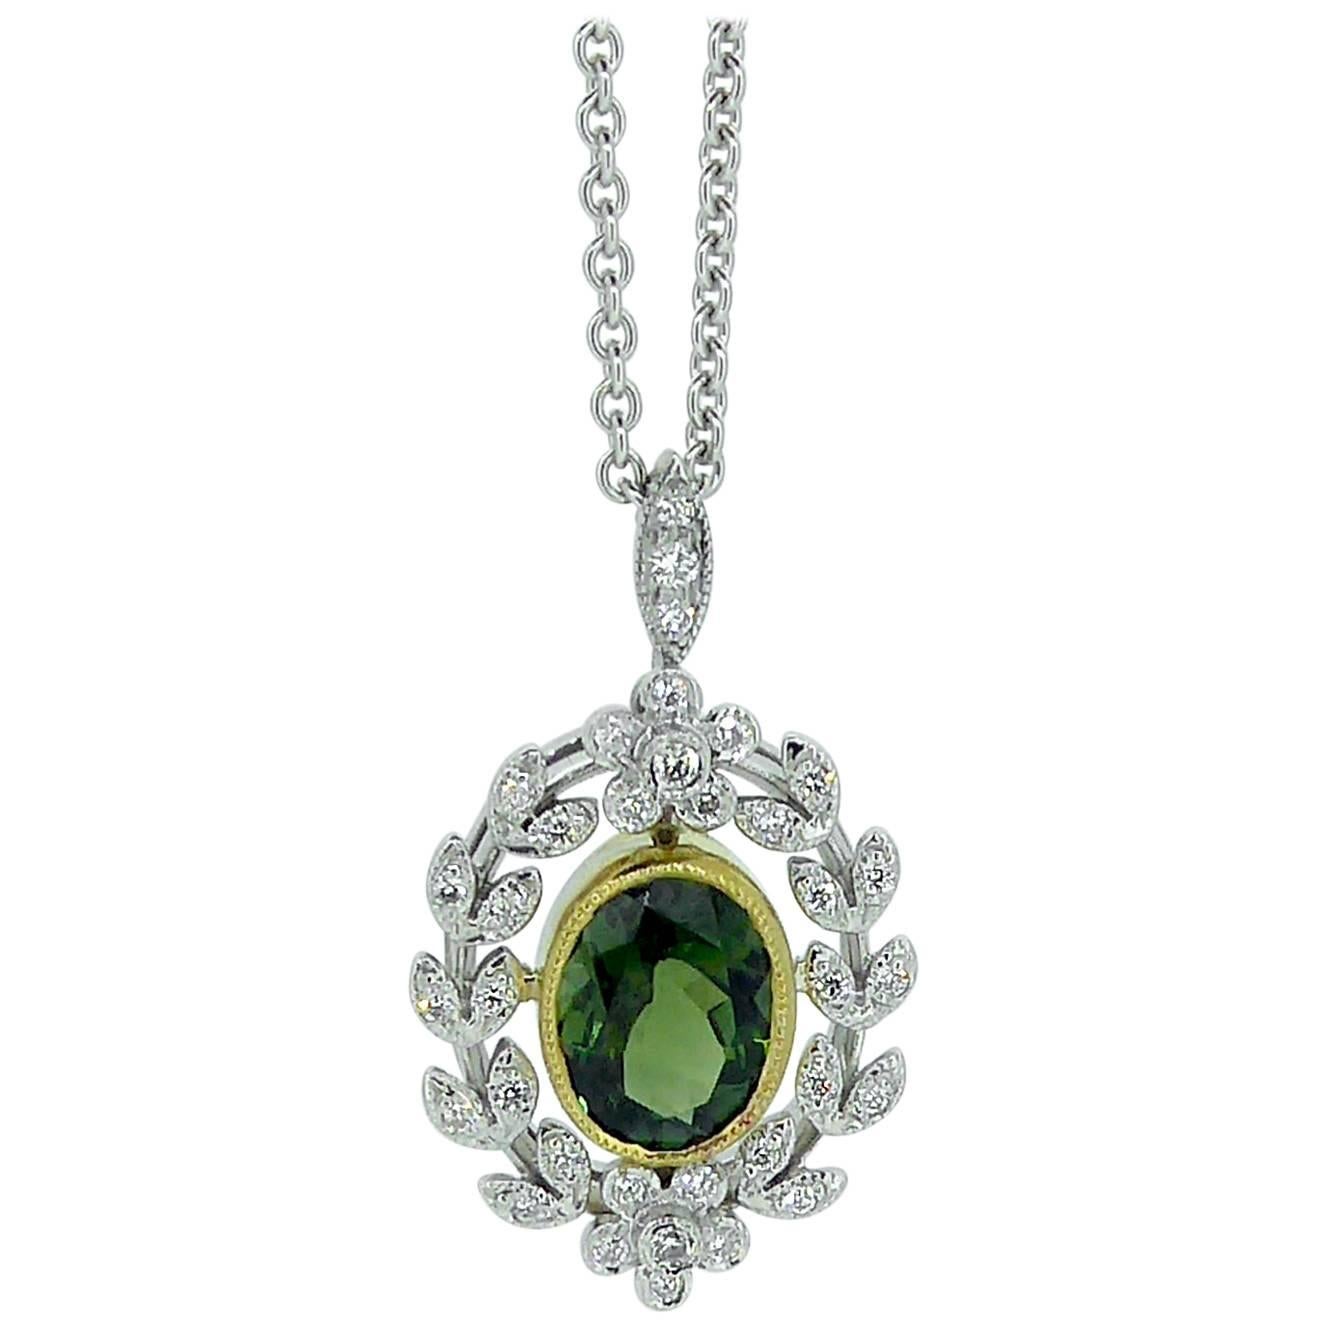 Antique Style 1.82 Carat Green Tourmaline Pendant with 0.21 Carat Diamonds